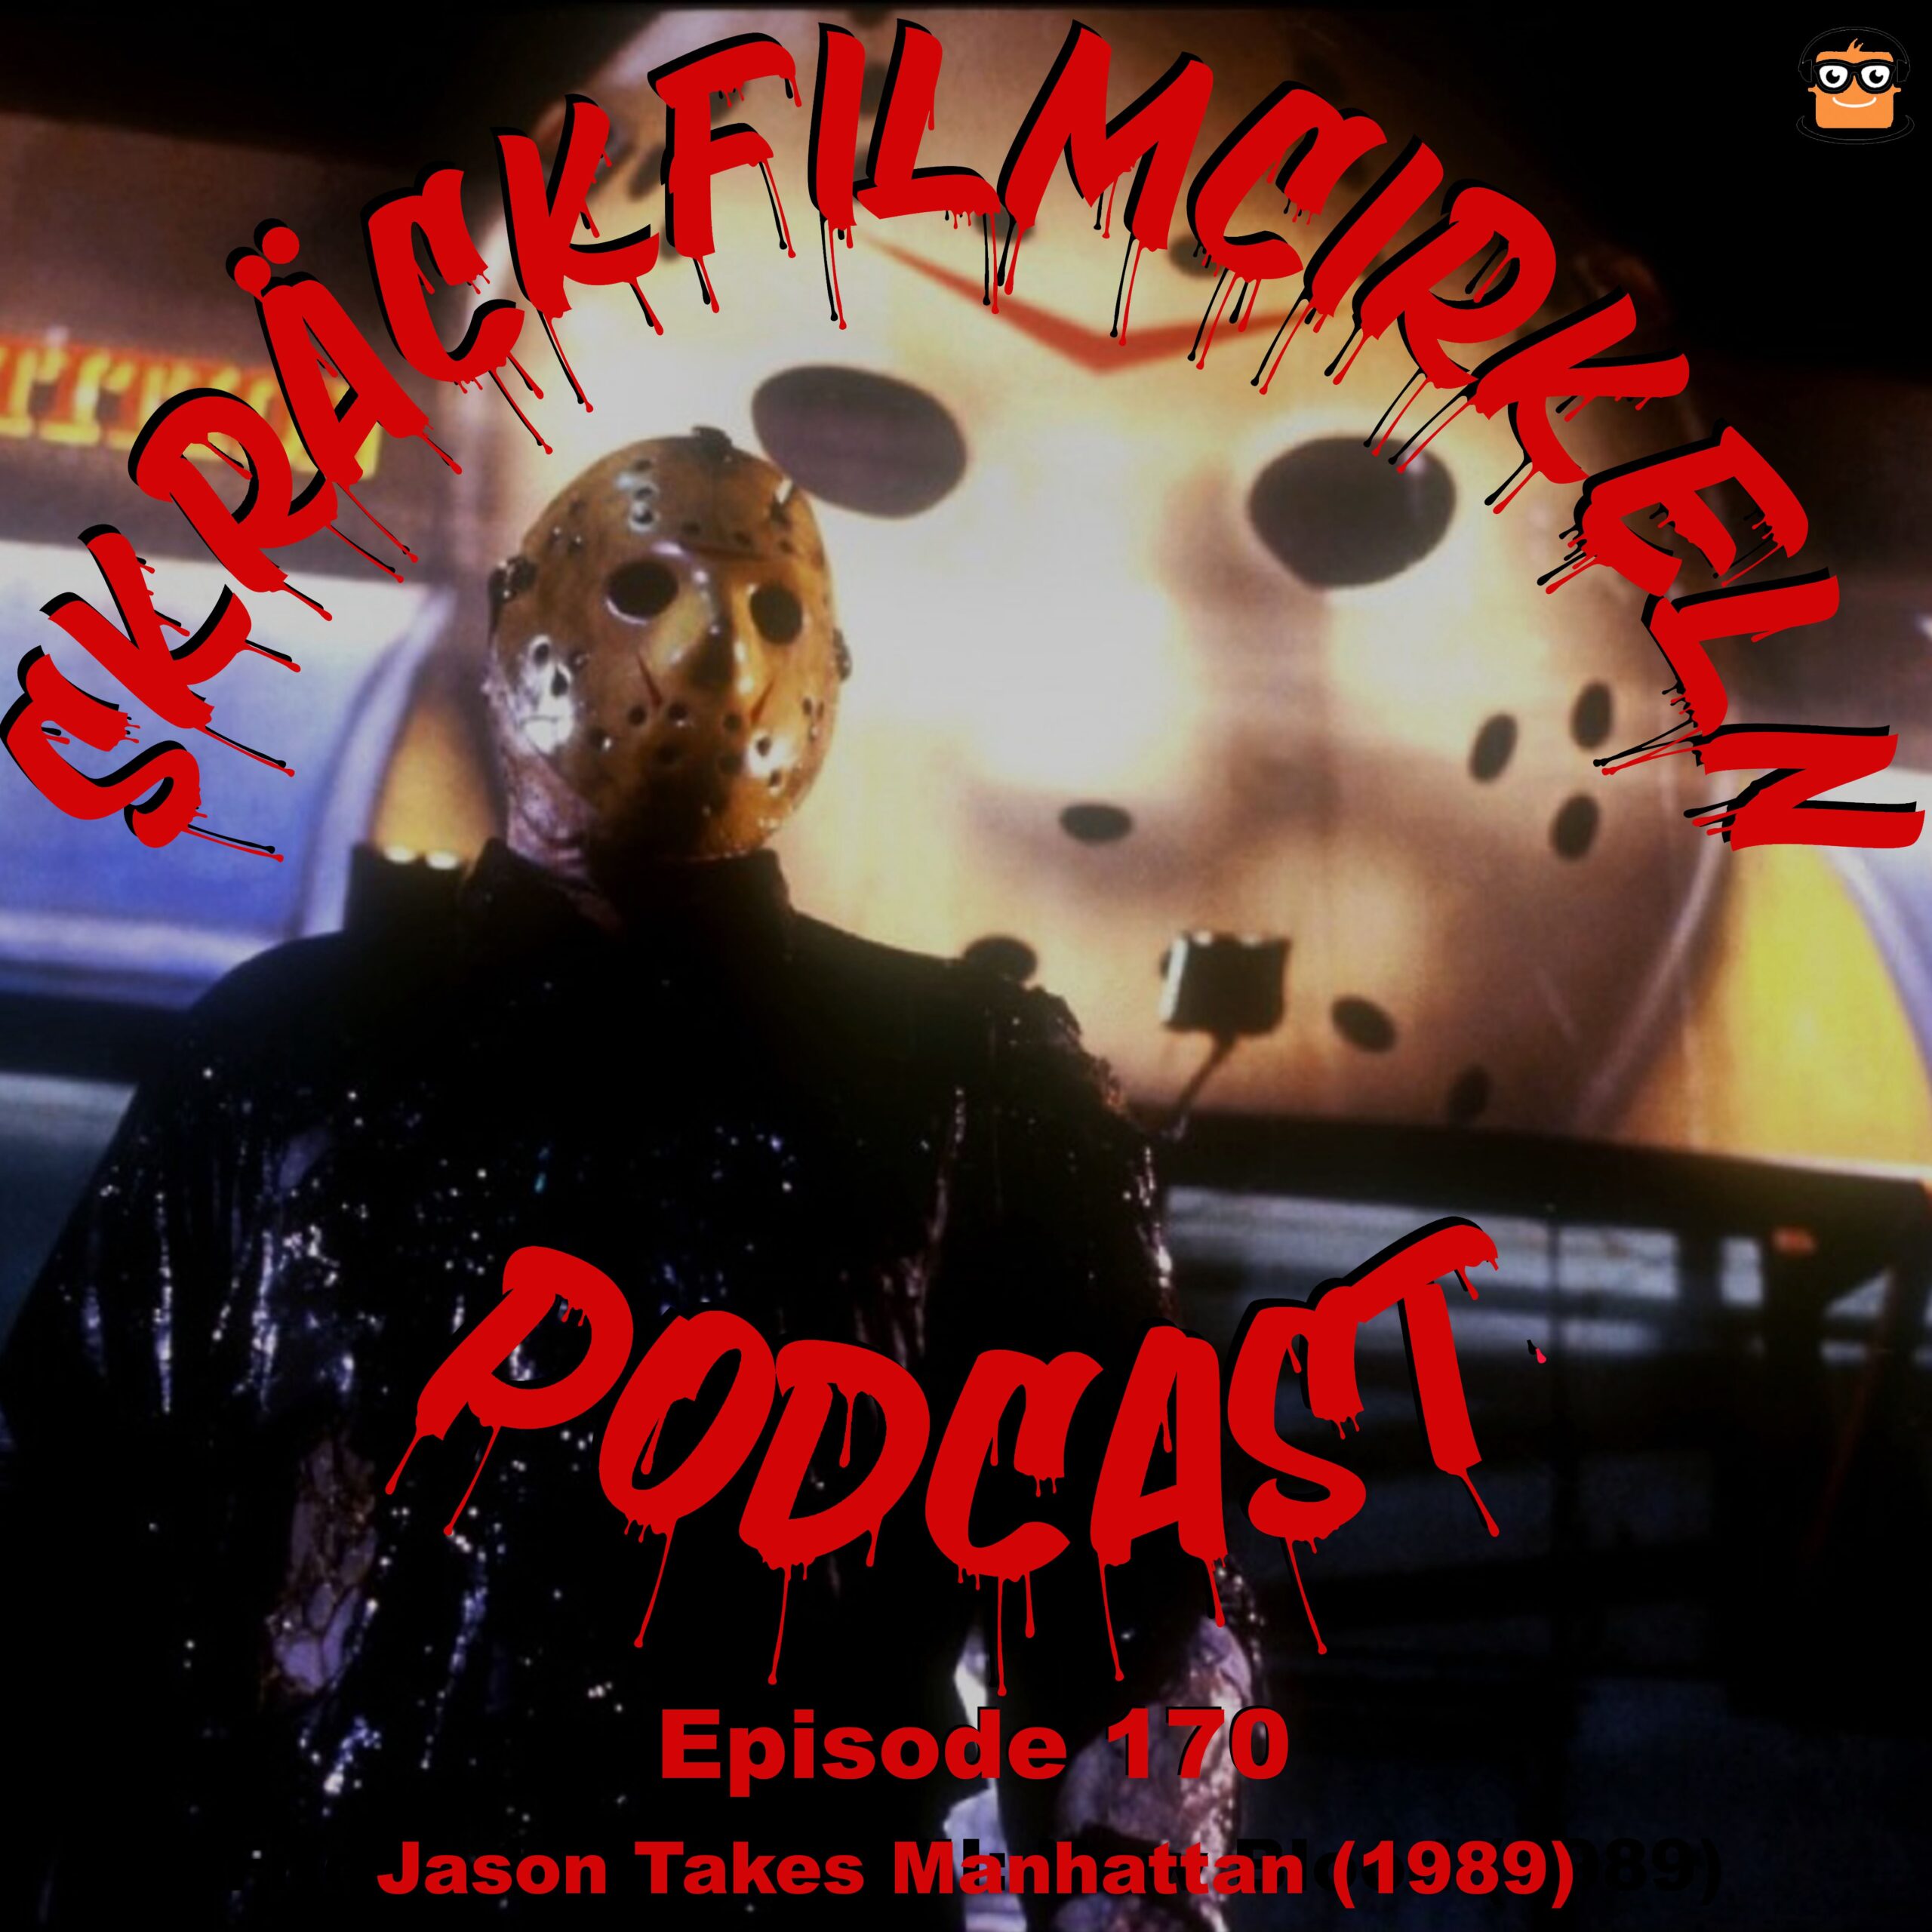 Episode 170 – Friday the 13th Part VIII: Jason Takes Manhattan